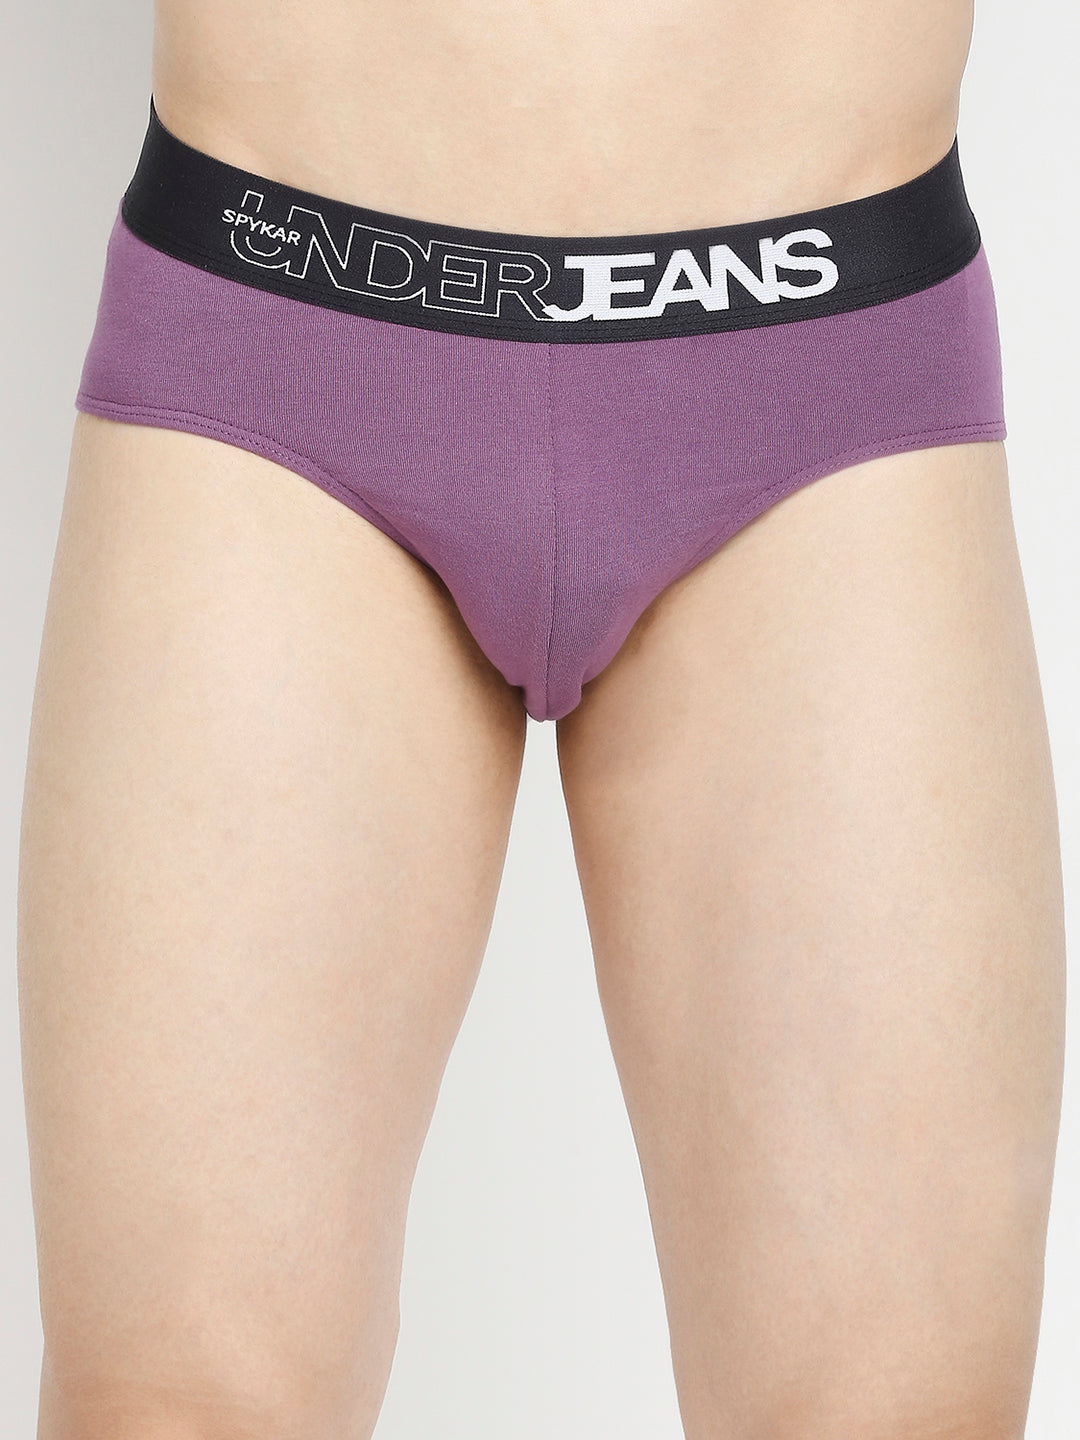 Men Premium Dull Purple & Black Cotton Blend Brief - Pack Of 2- UnderJeans by Spykar